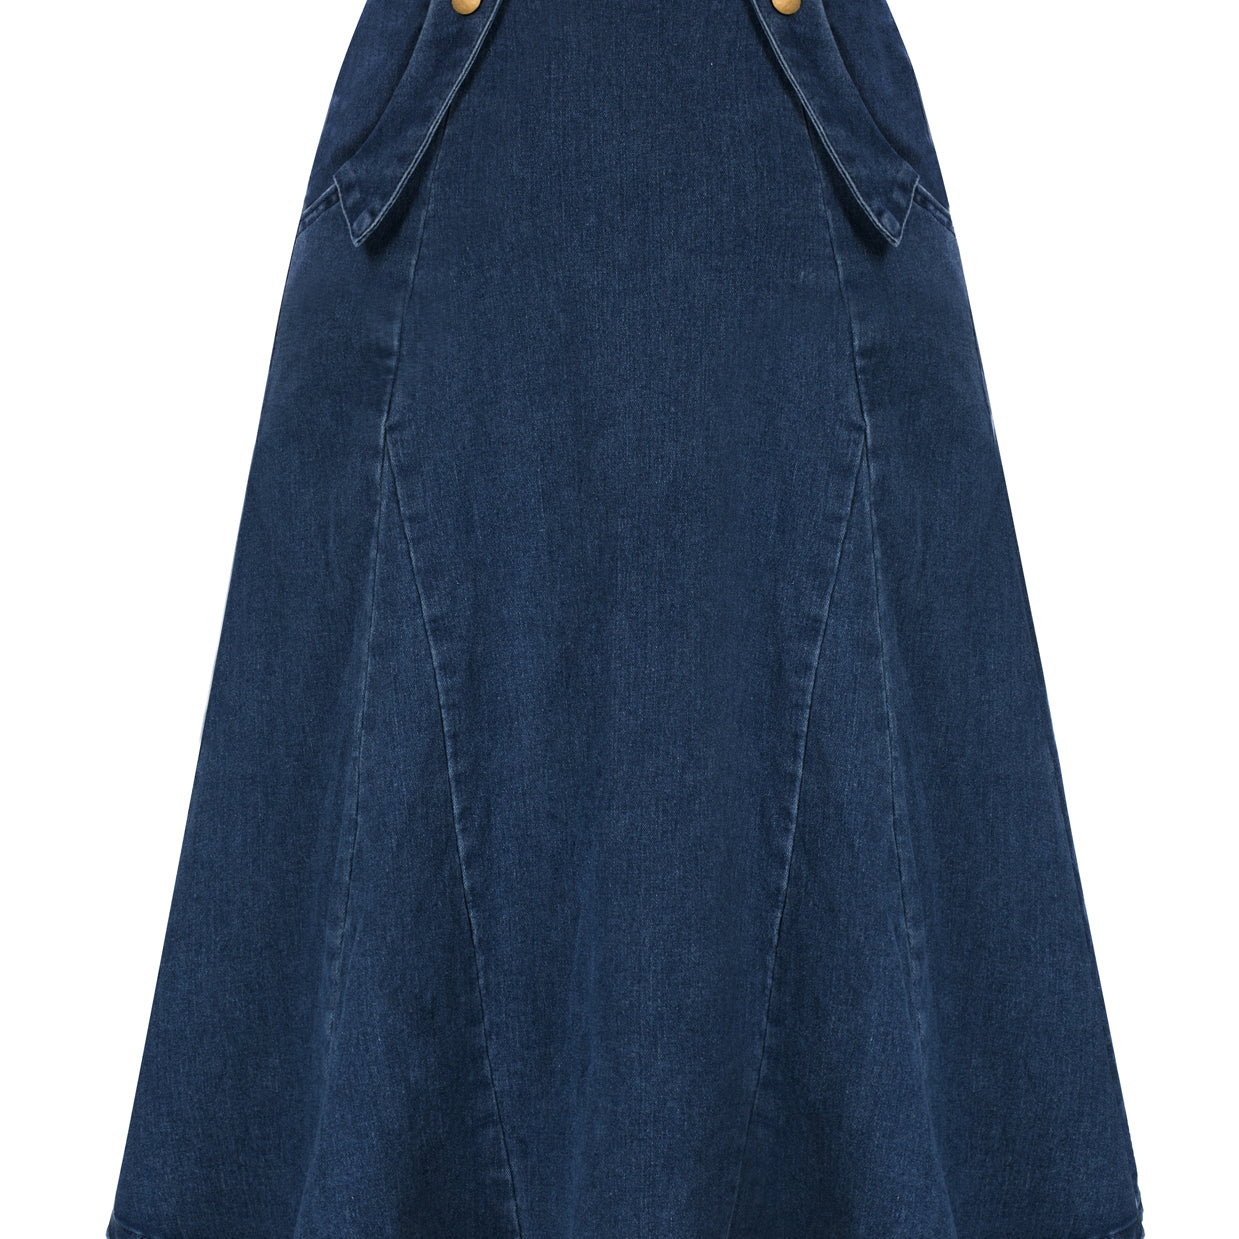 Denim Skirts Knee Length Vintage Elastic High Waist A-Line Midi Jean Skirts with Pockets